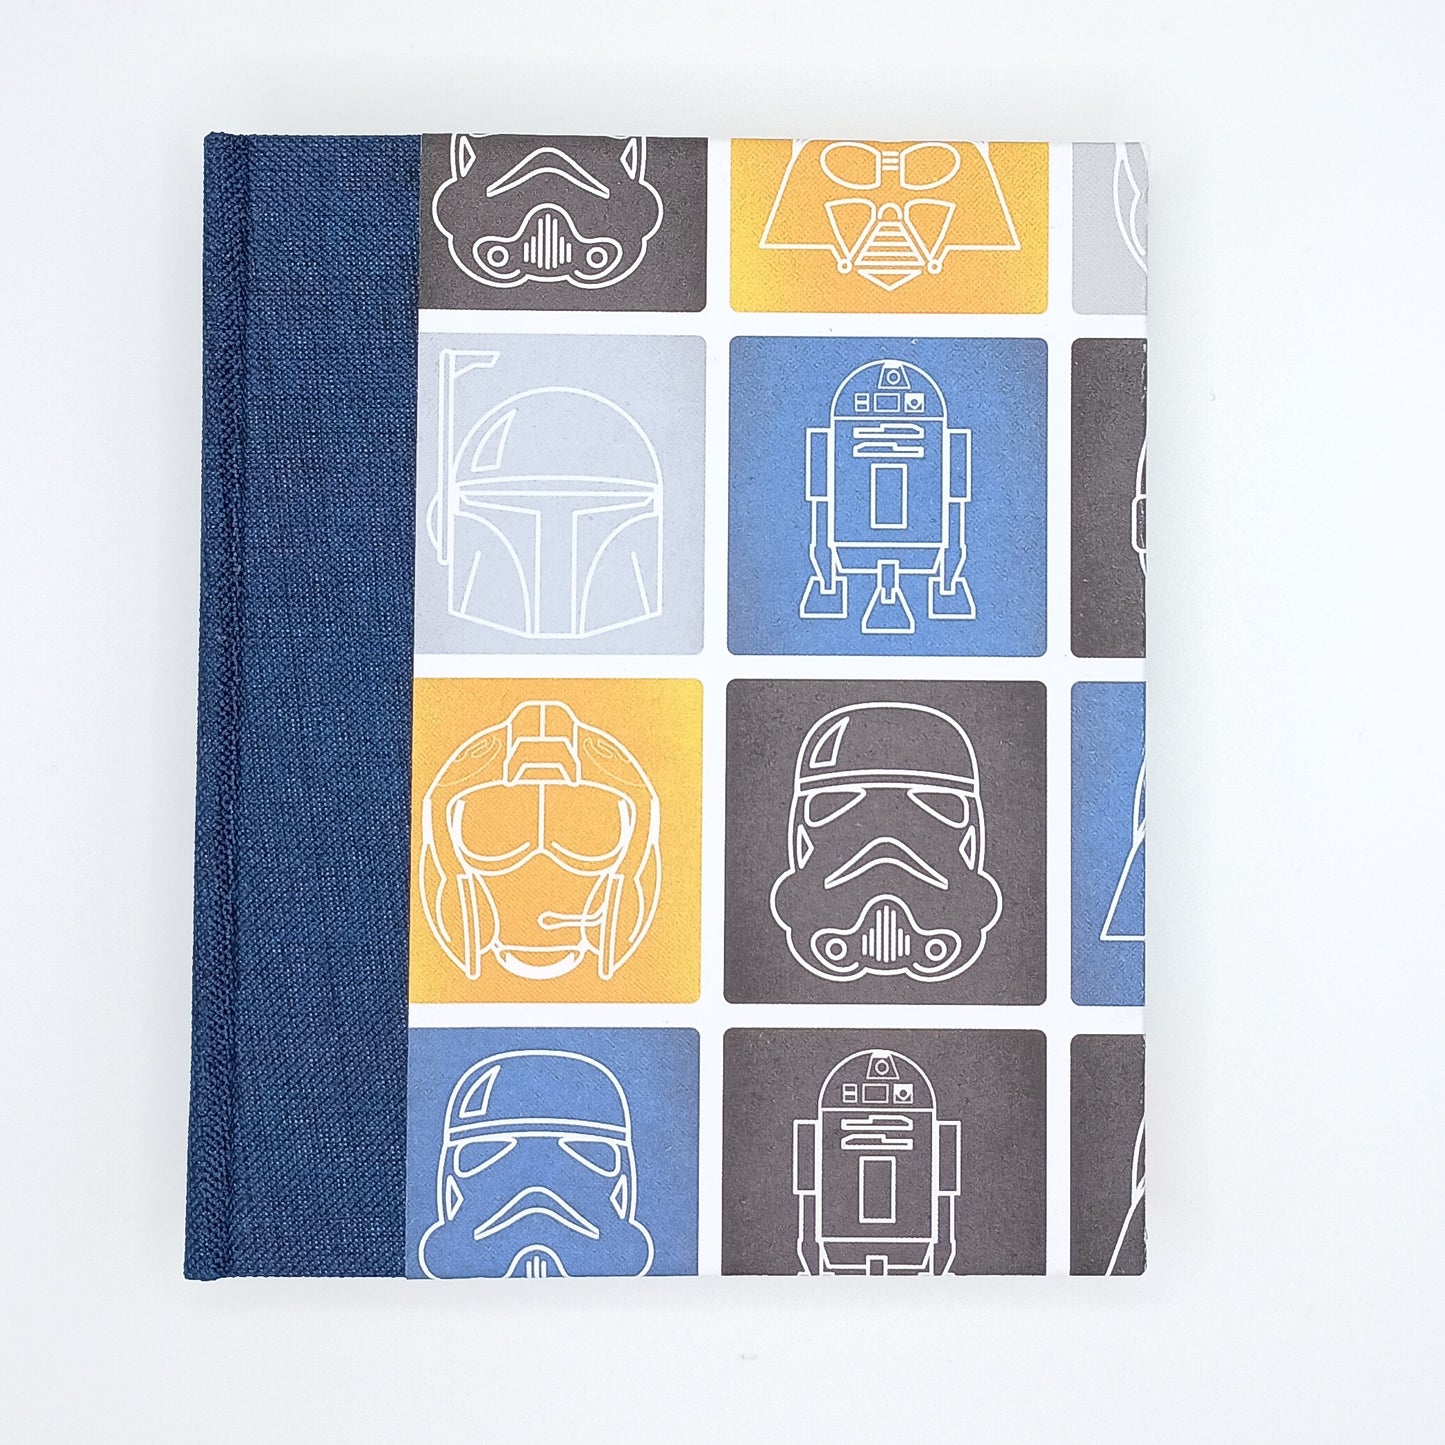 Star Wars Journals (2024 limited edition)